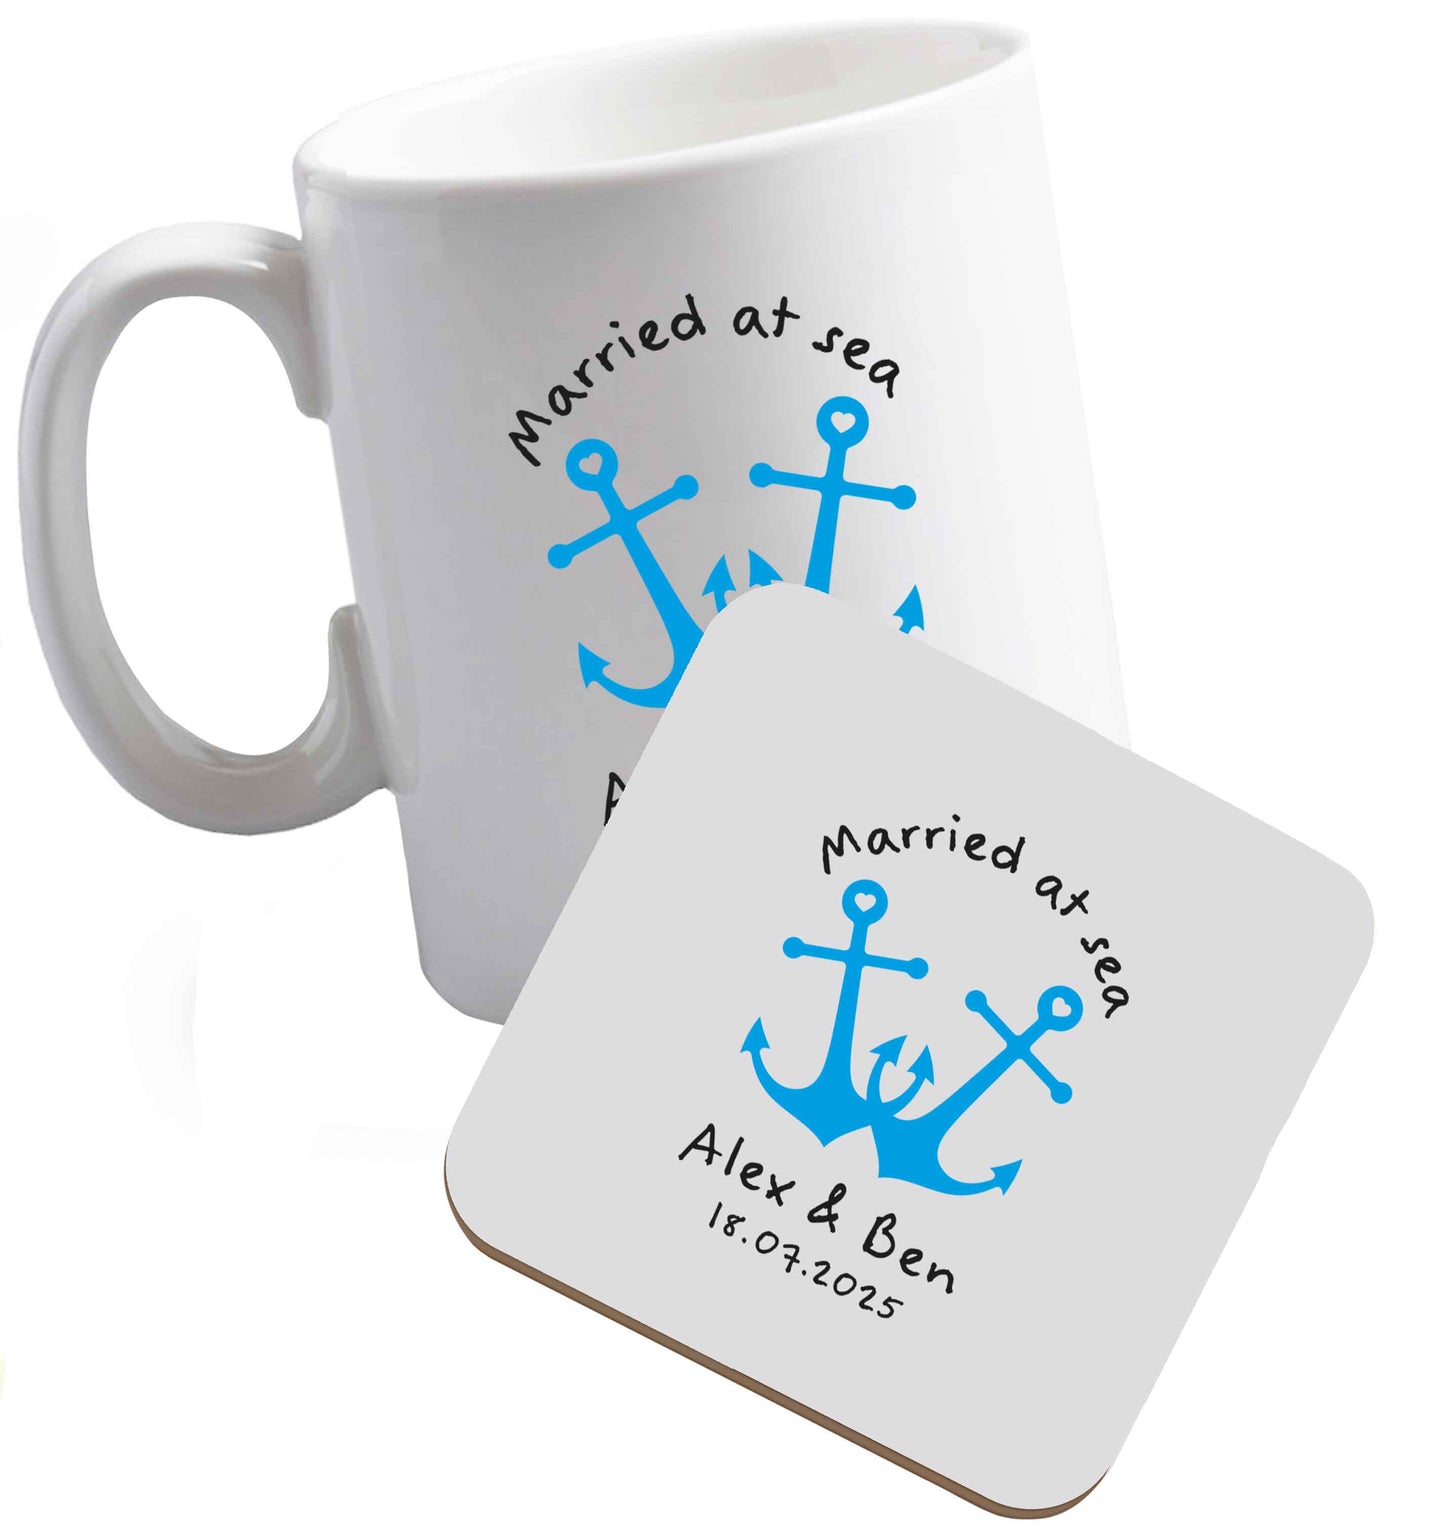 10 oz Married at sea blue anchors ceramic mug and coaster set right handed